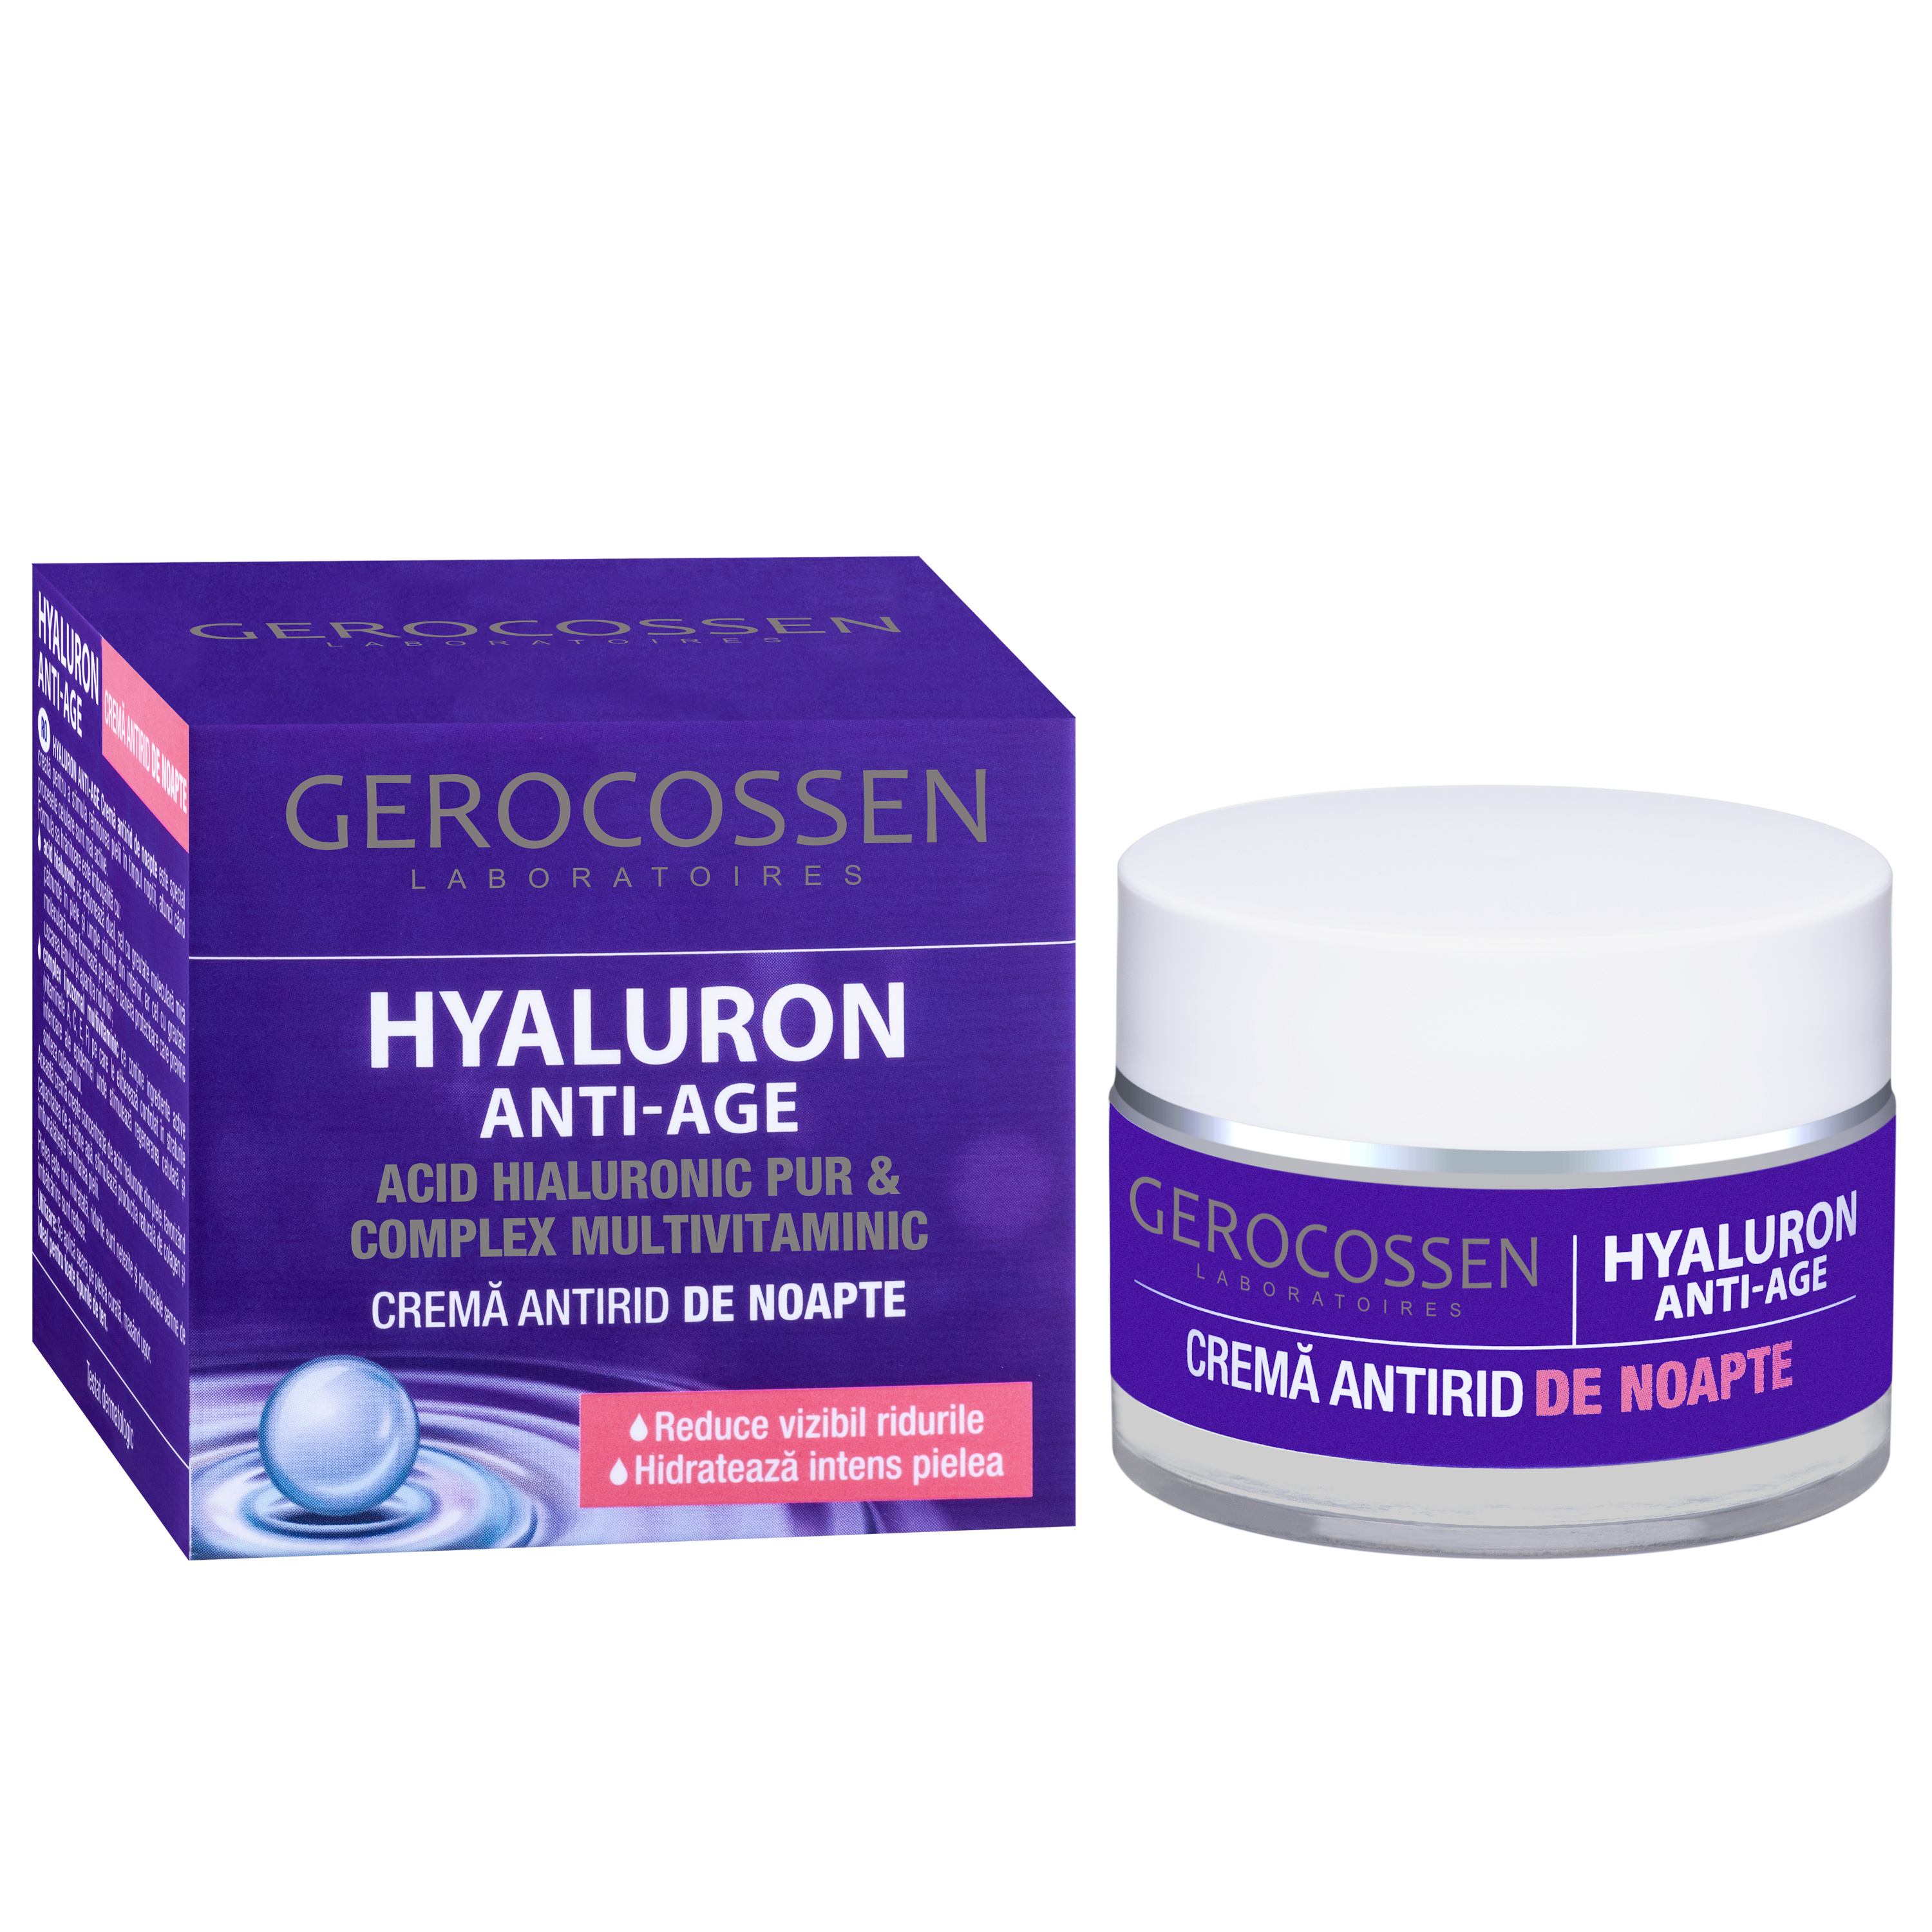 Hyaluron anti-age crema antirid zi spf 10 - 50ml, Gerocossen